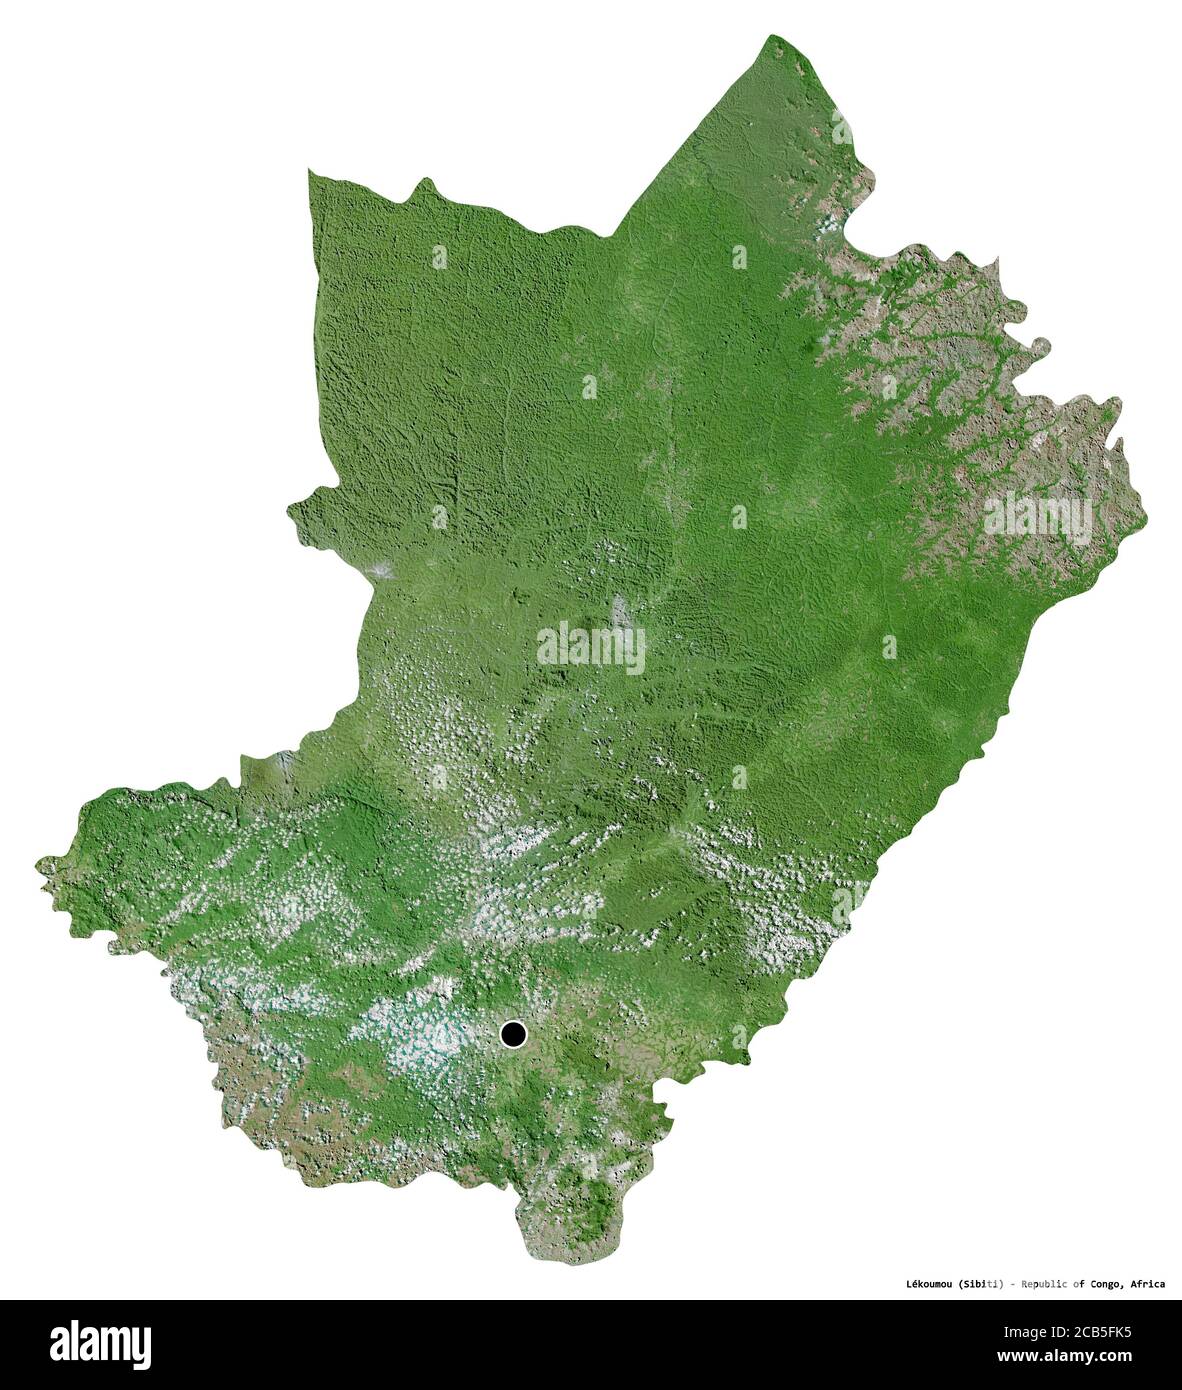 Shape of Lékoumou, region of Republic of Congo, with its capital isolated on white background. Satellite imagery. 3D rendering Stock Photo